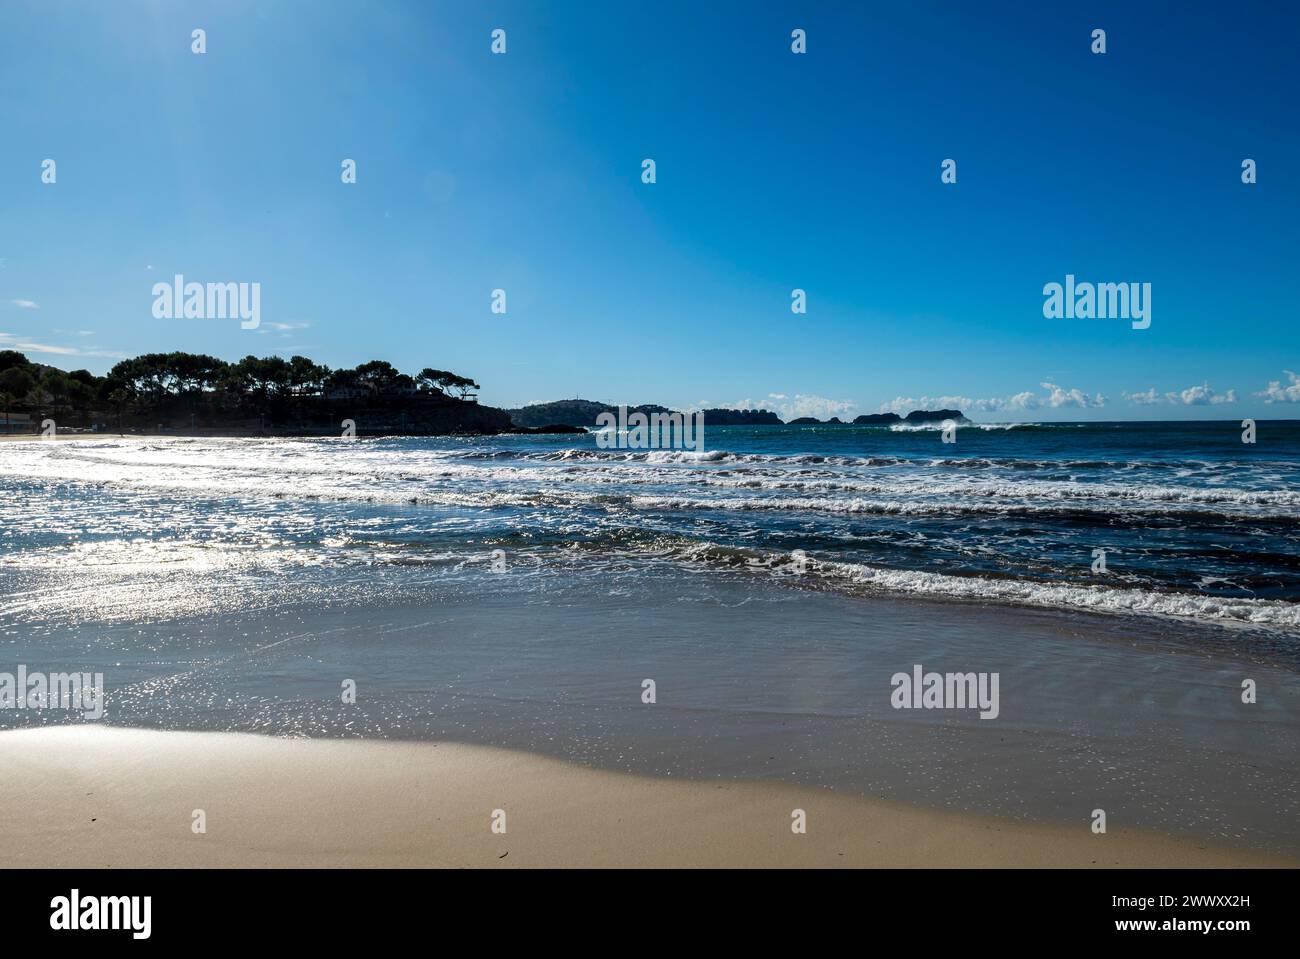 View from the beach promenade at Playa Palmira in Paguera or Peguera, municipality of Calvia, Majorca, Balearic Islands, Spain Stock Photo